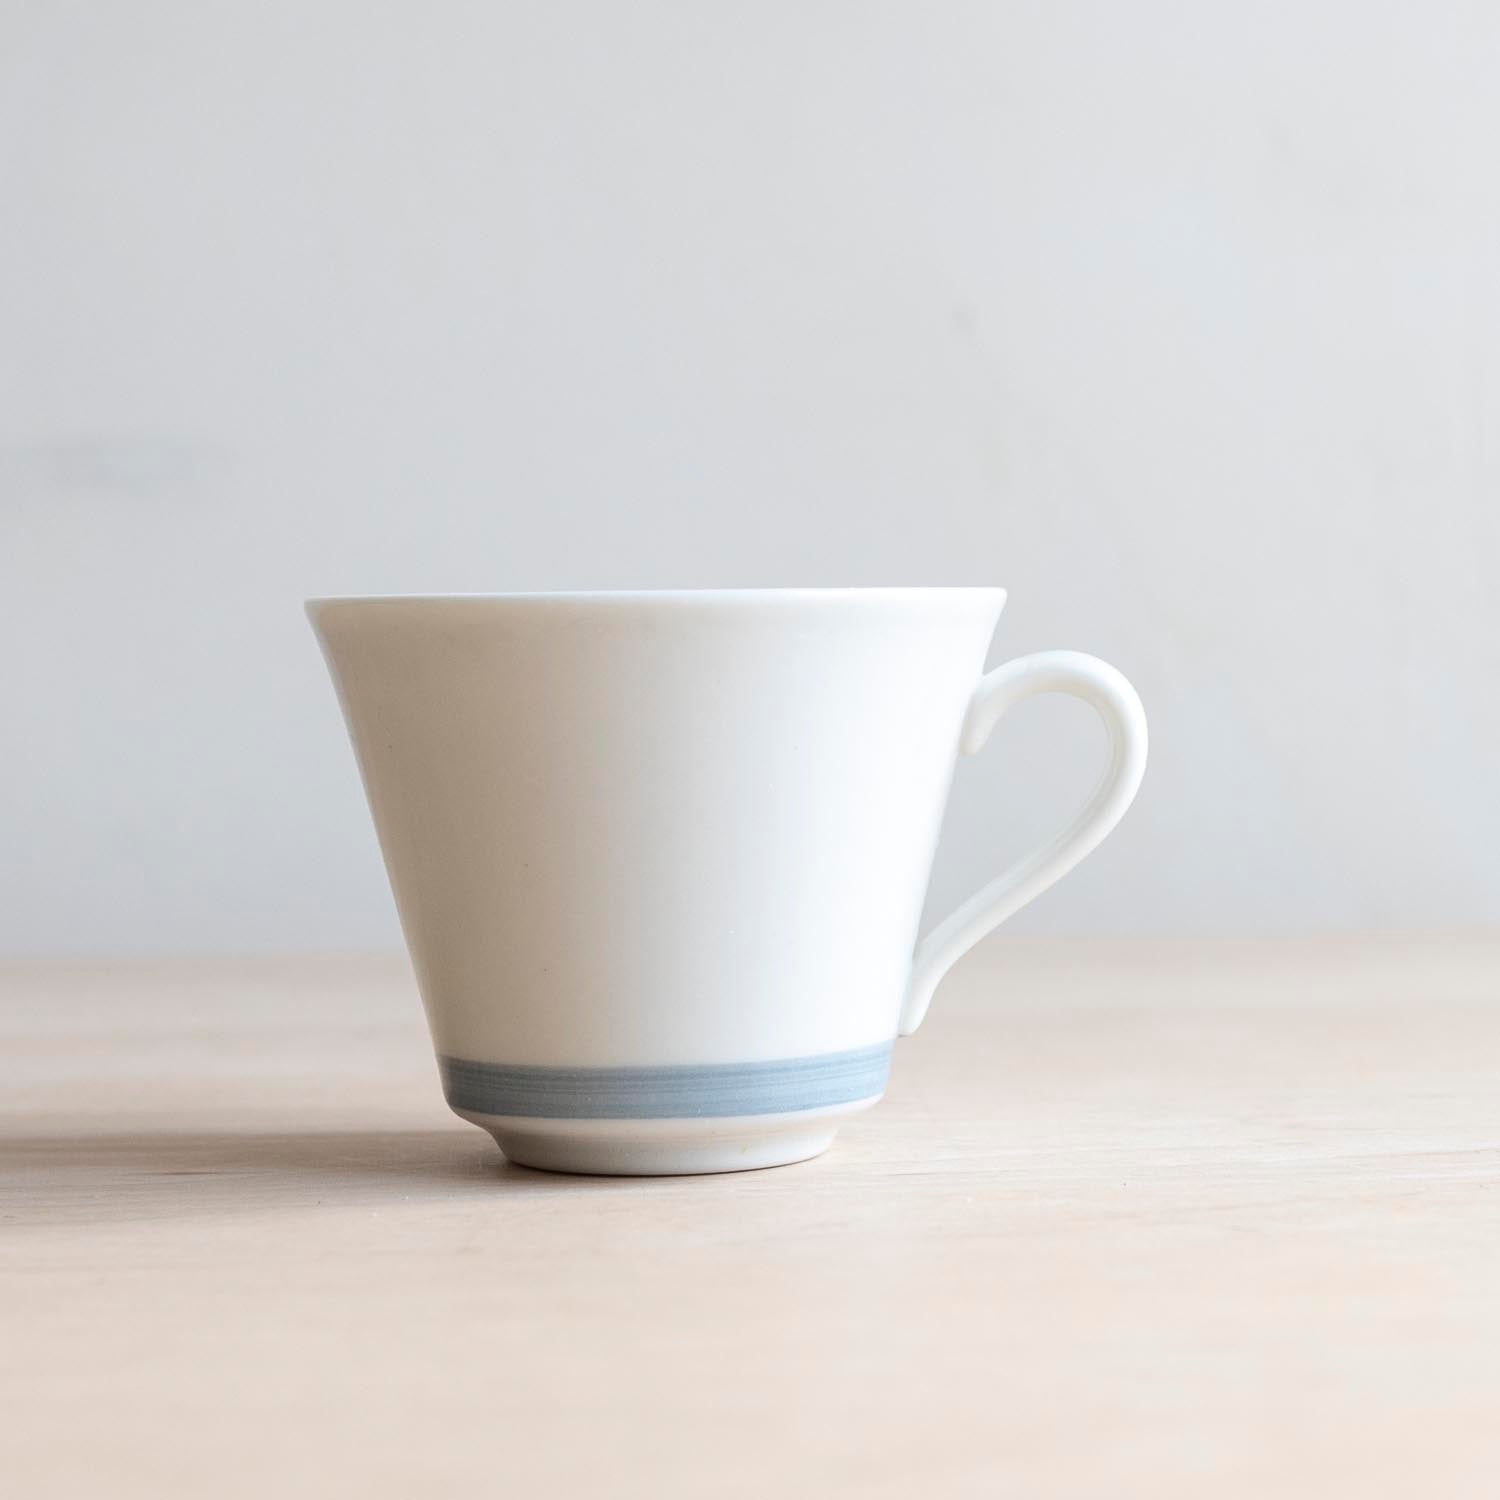 【Vintage】'TROJA' Coffee cup & saucer